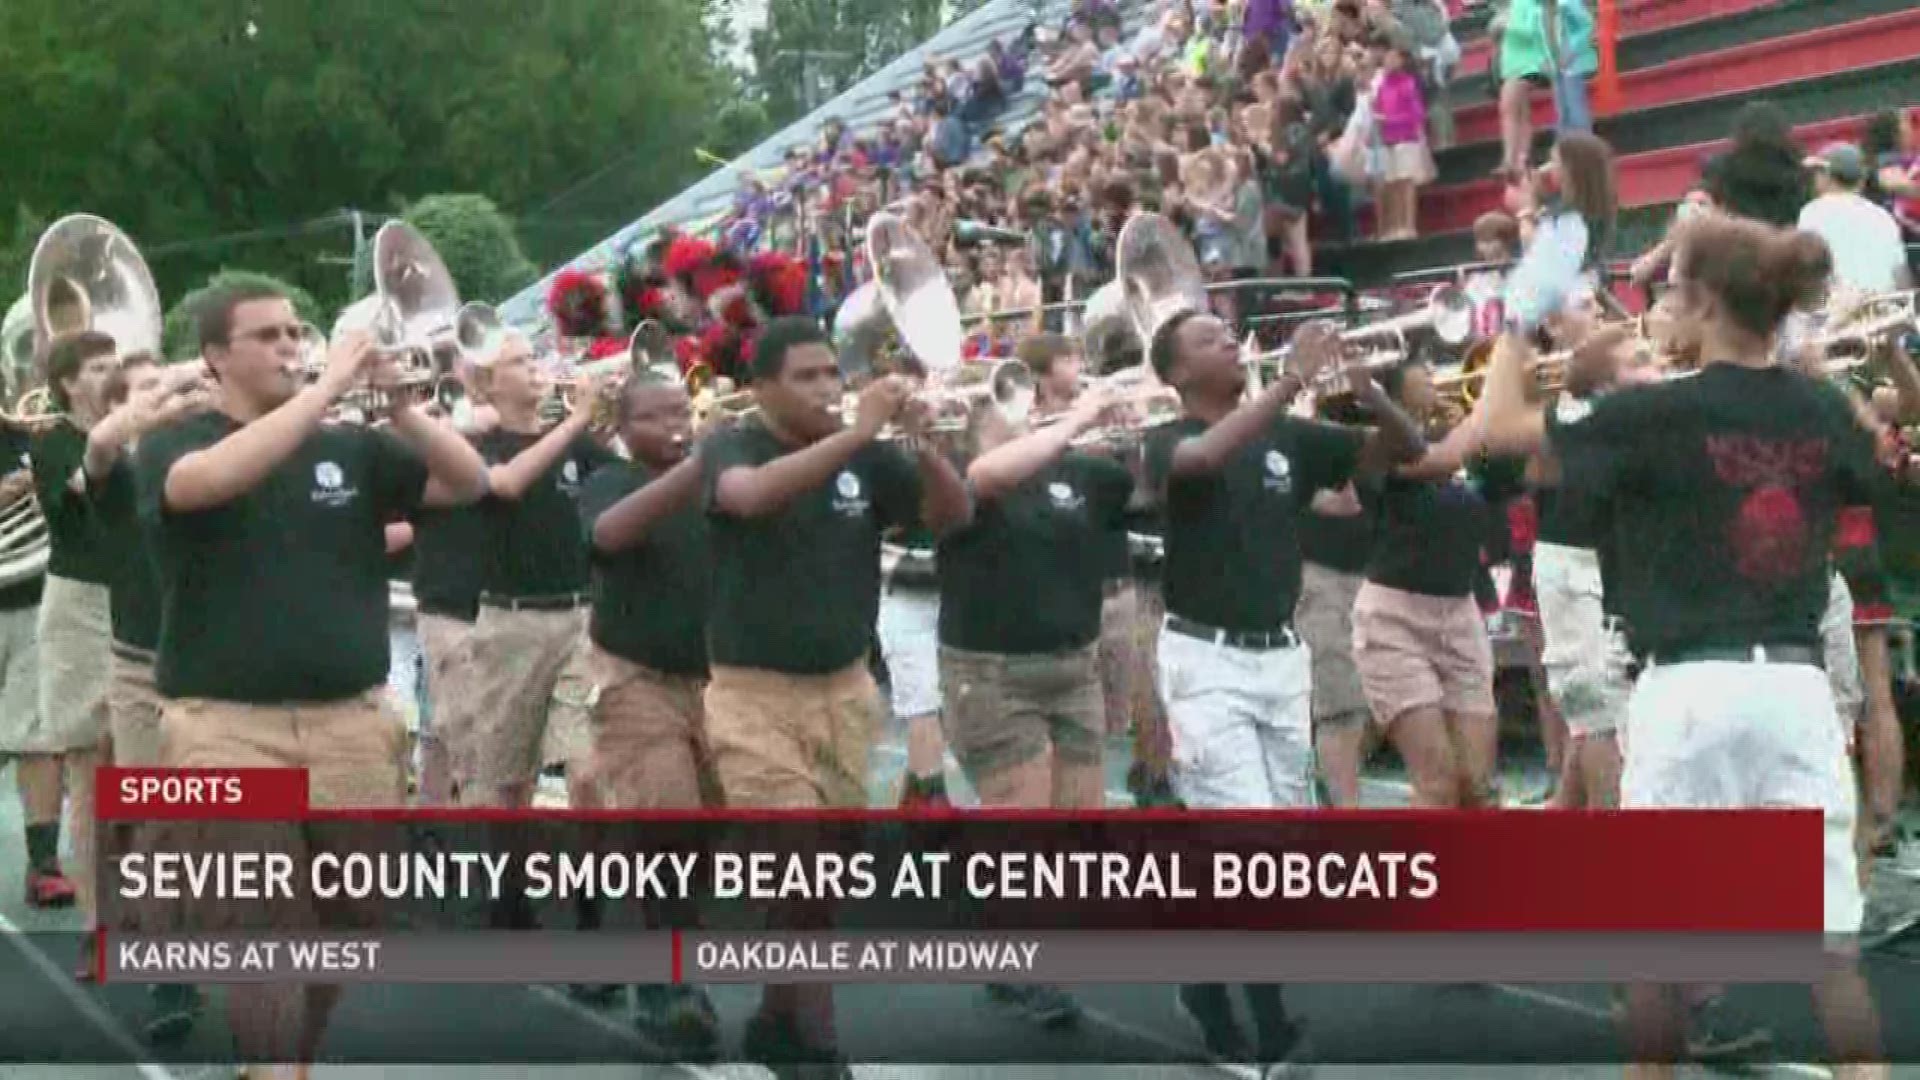 The Smoky bears top the Knox Central Bobcats